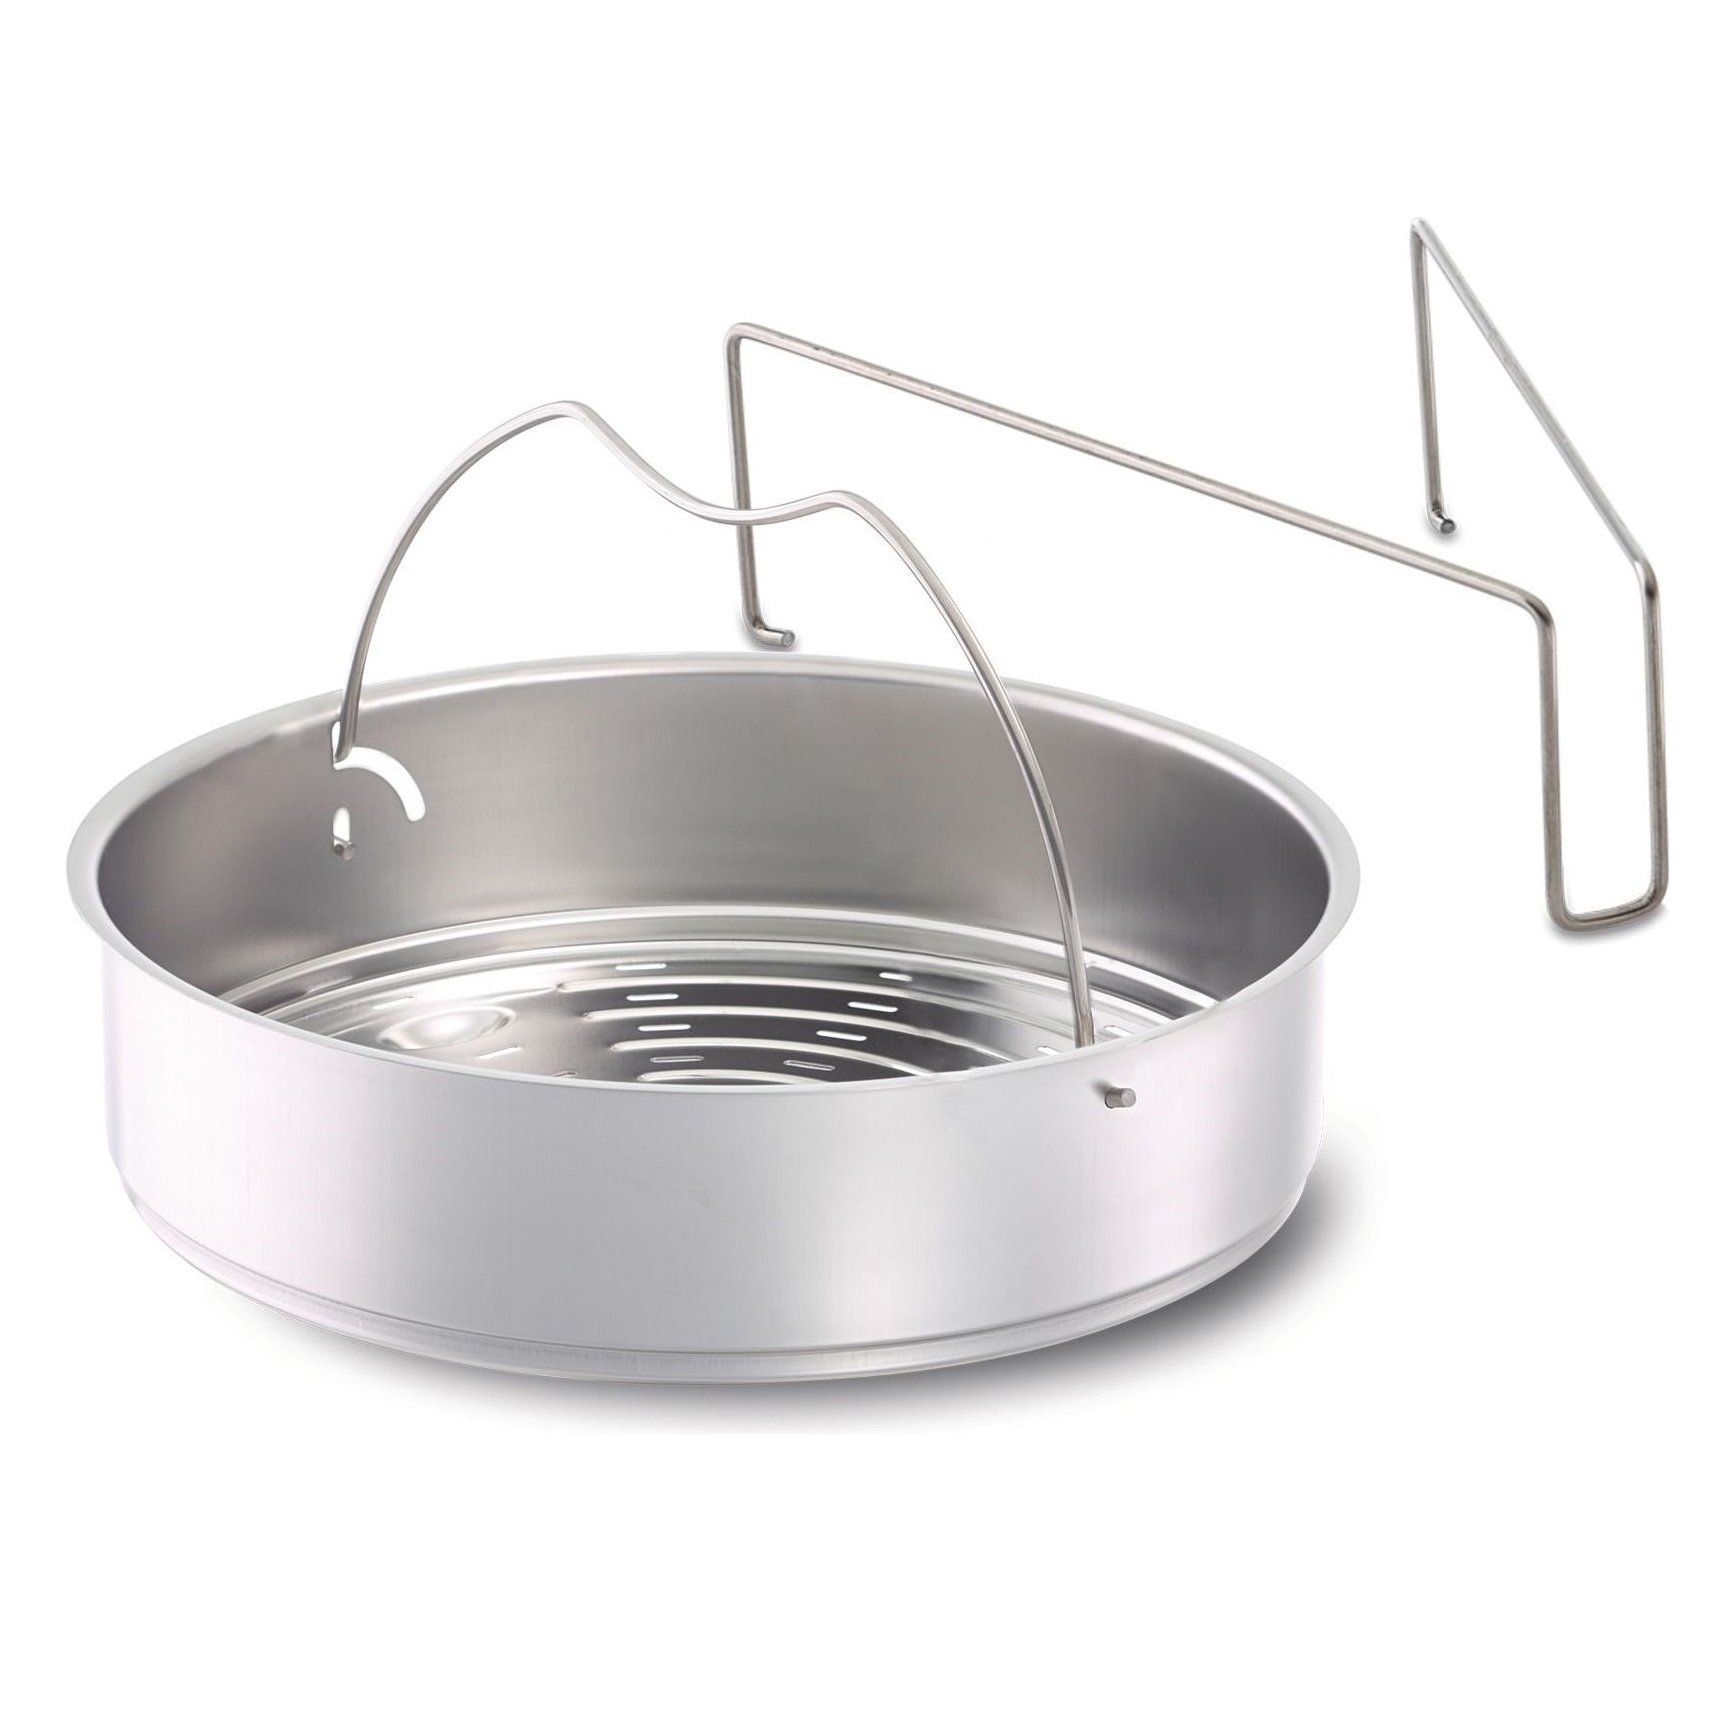  Xửng hấp nồi áp suất Fissler (đi kèm chân đế) - Fissler Pressure Cooker Steaming Basket with Tripod 22cm 